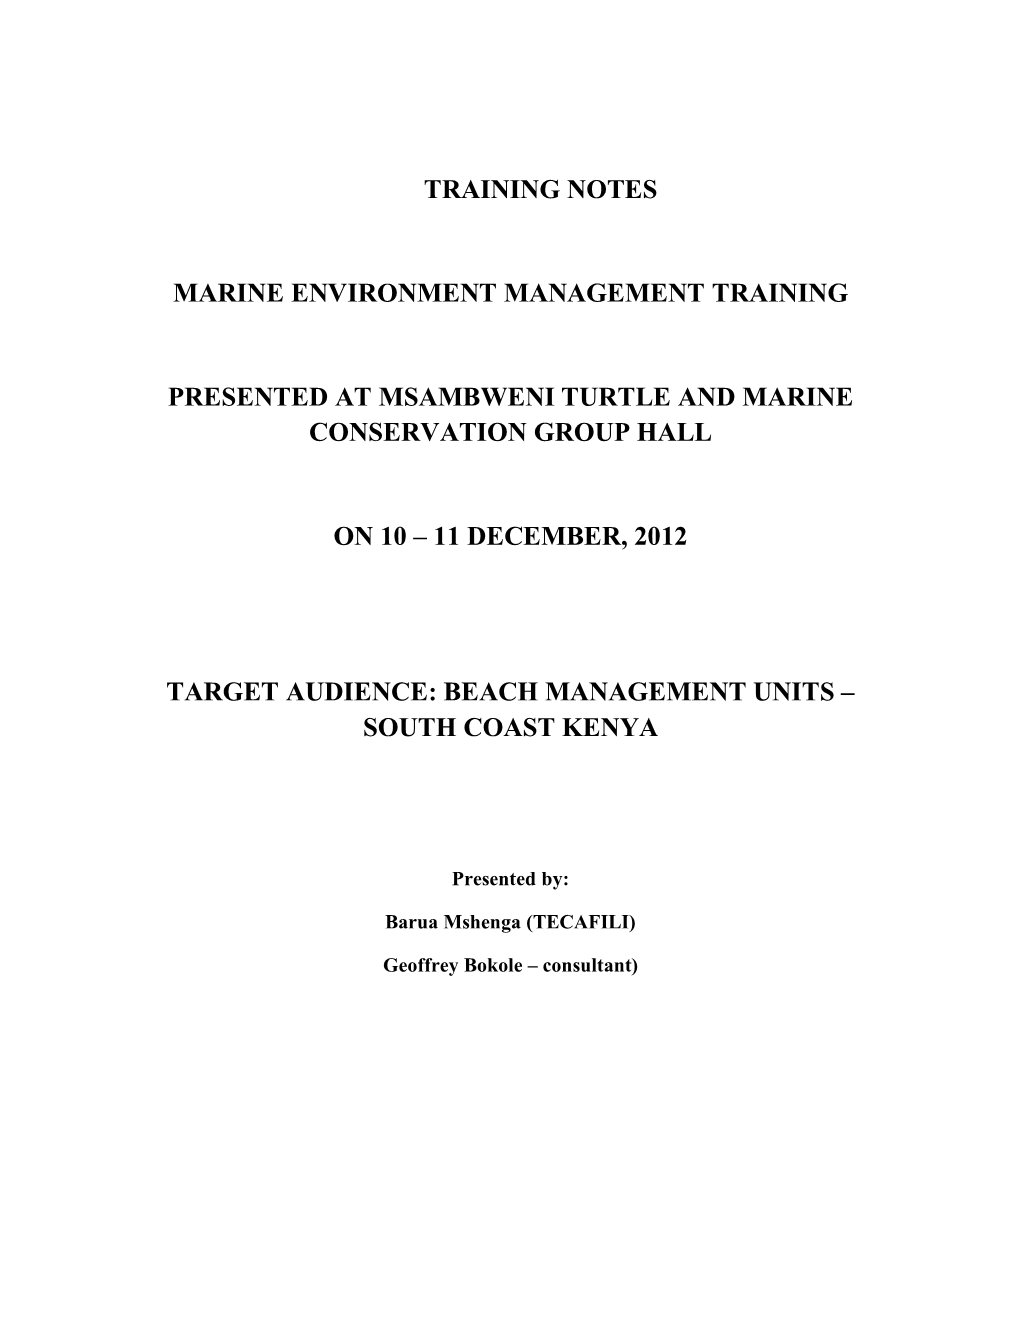 Marine Environment Management Training